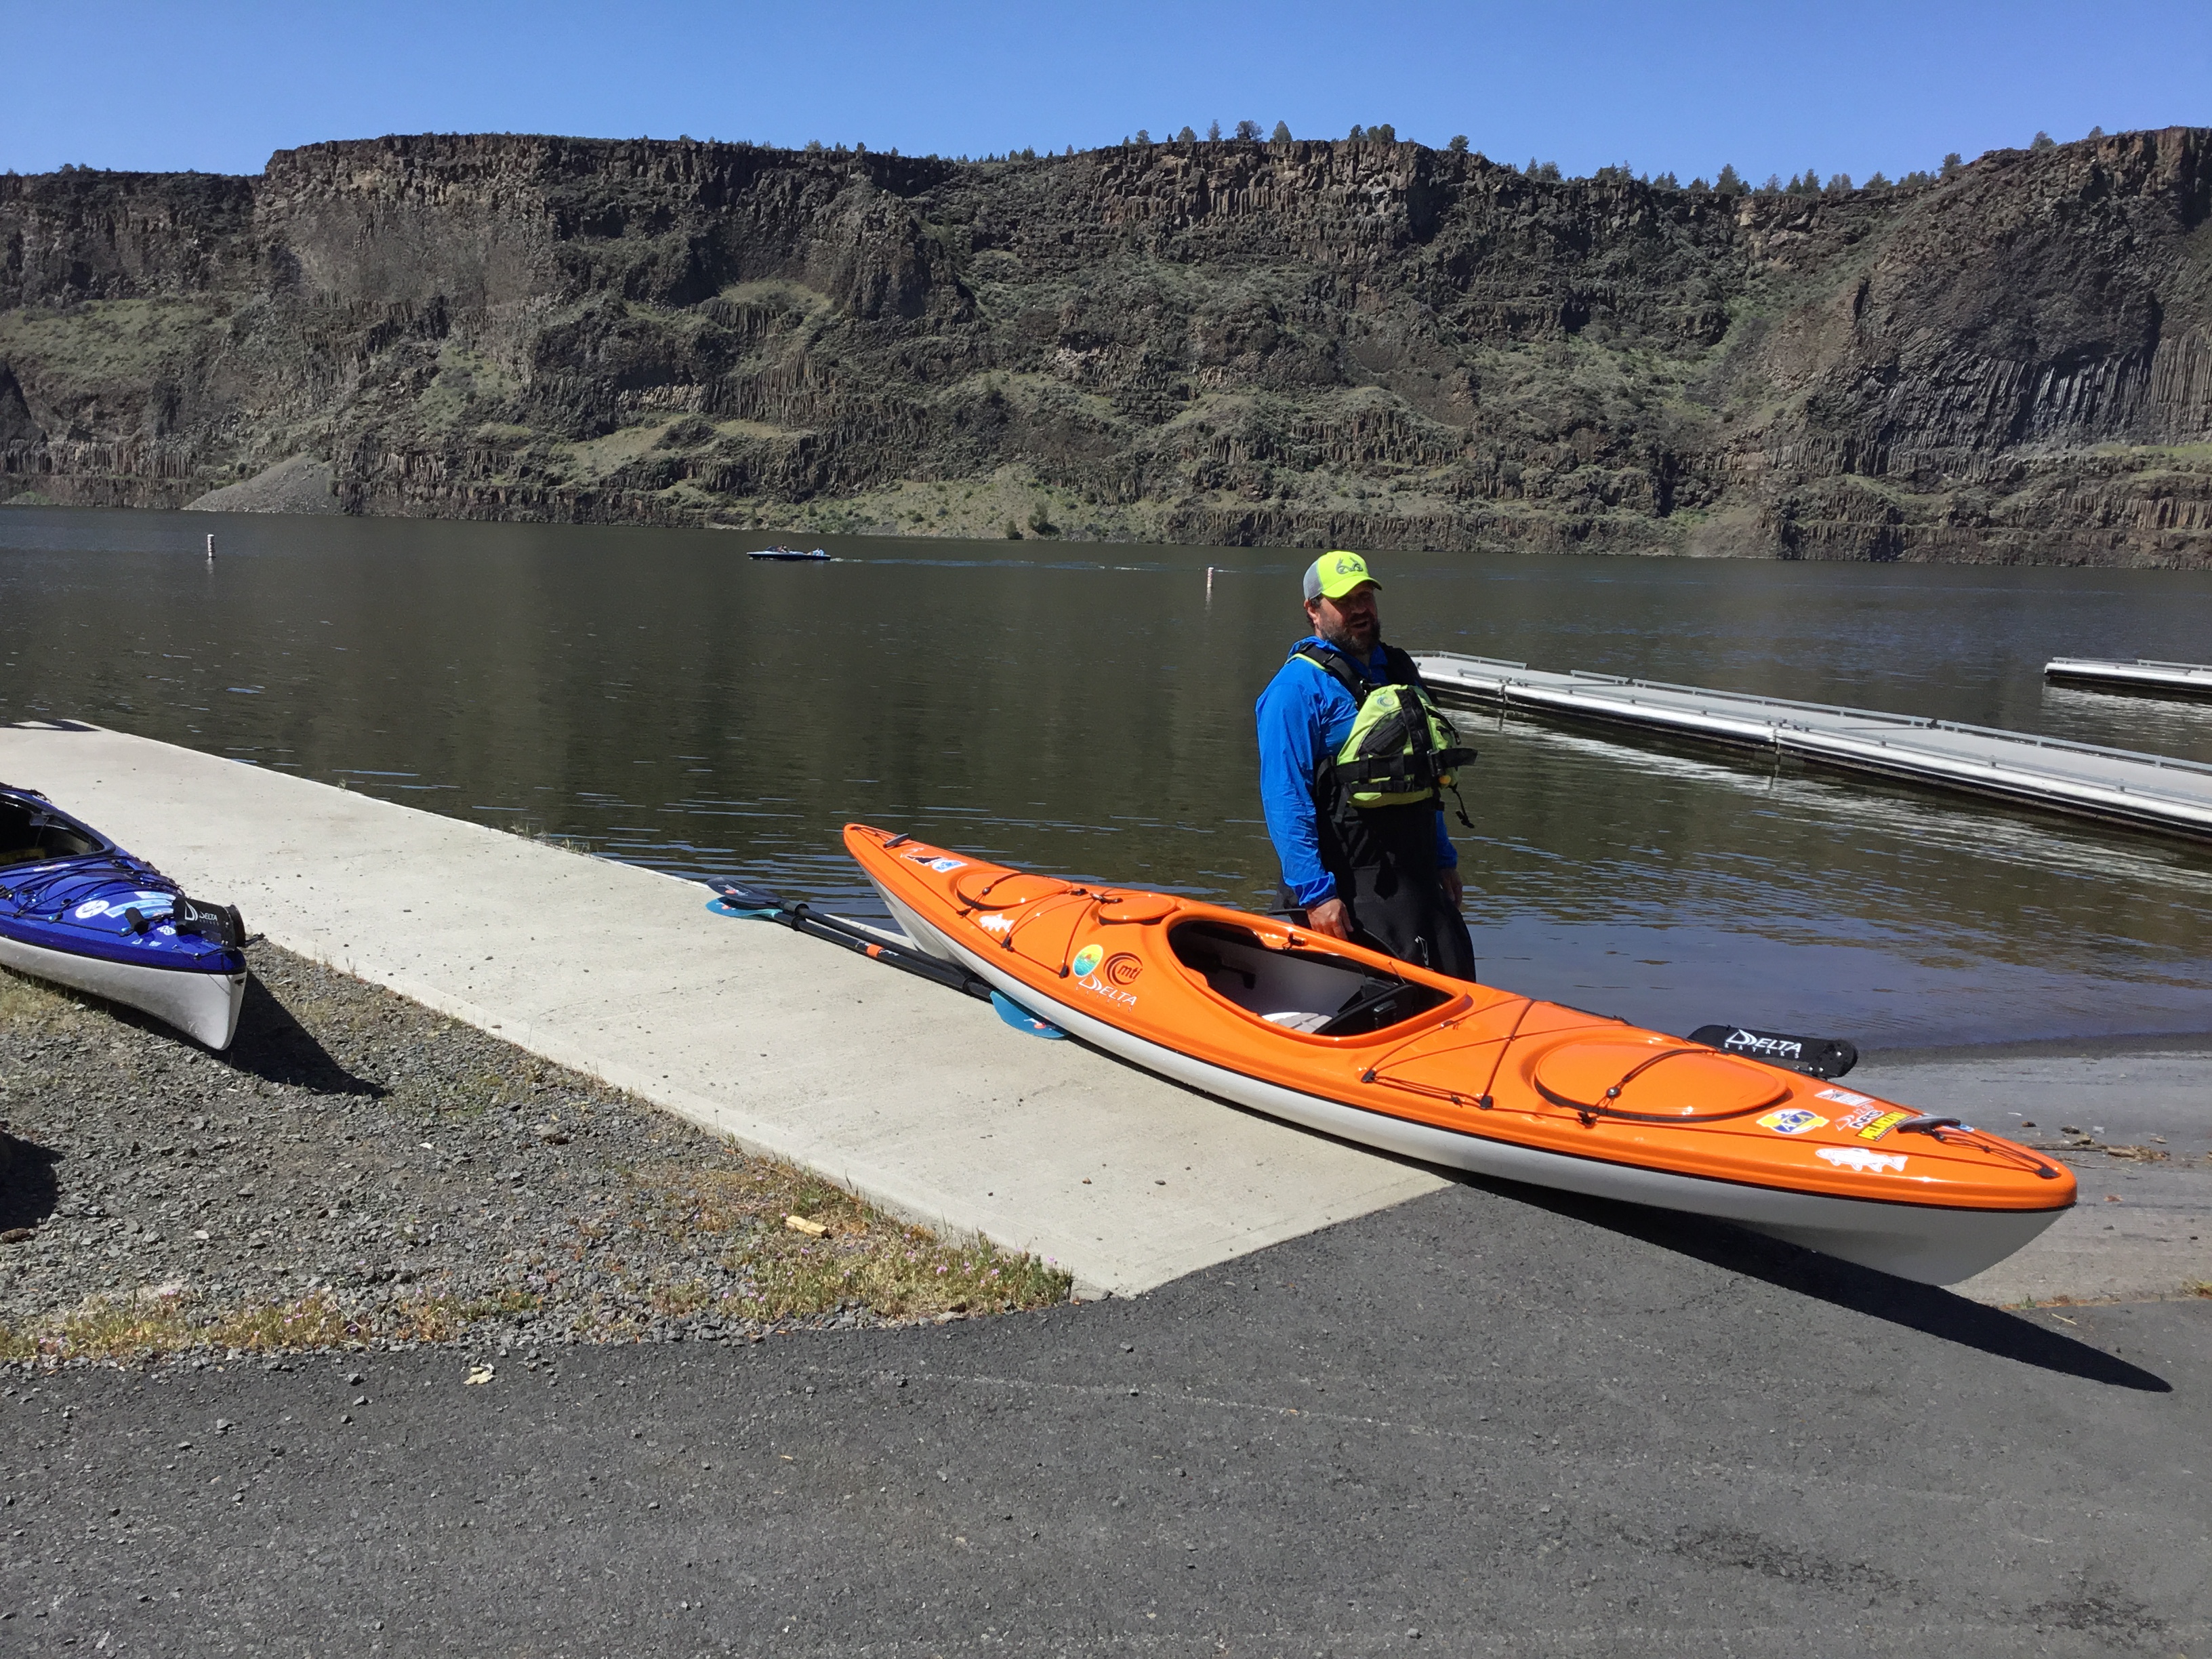 American Canoe Association's representative, Marcel Bieg launching on Lake Billy Chinook